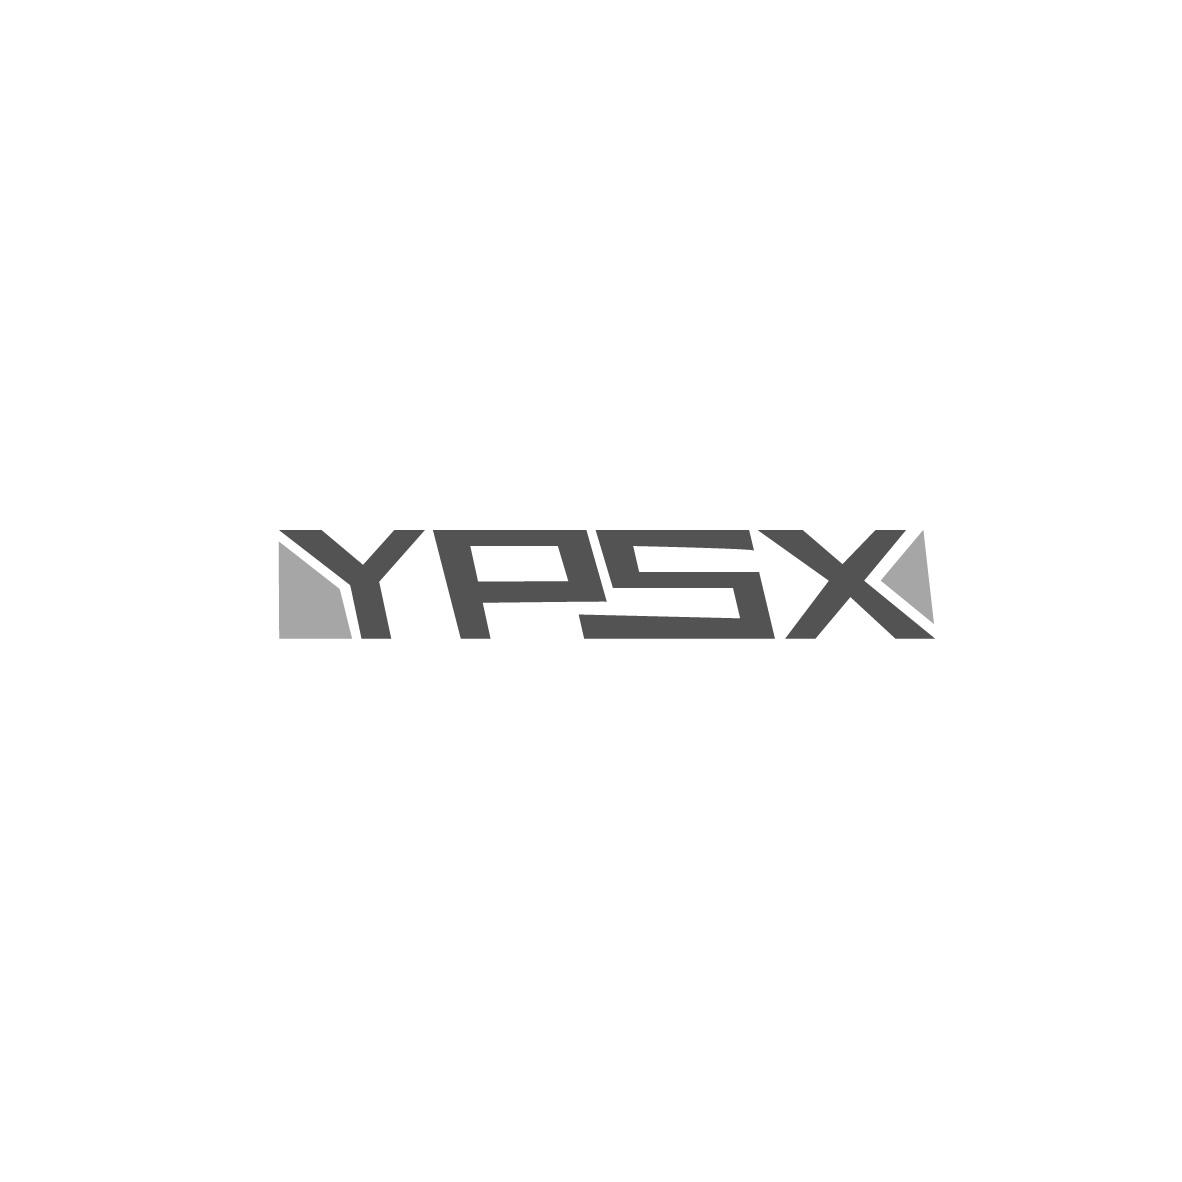 11类-电器灯具YPSX商标转让